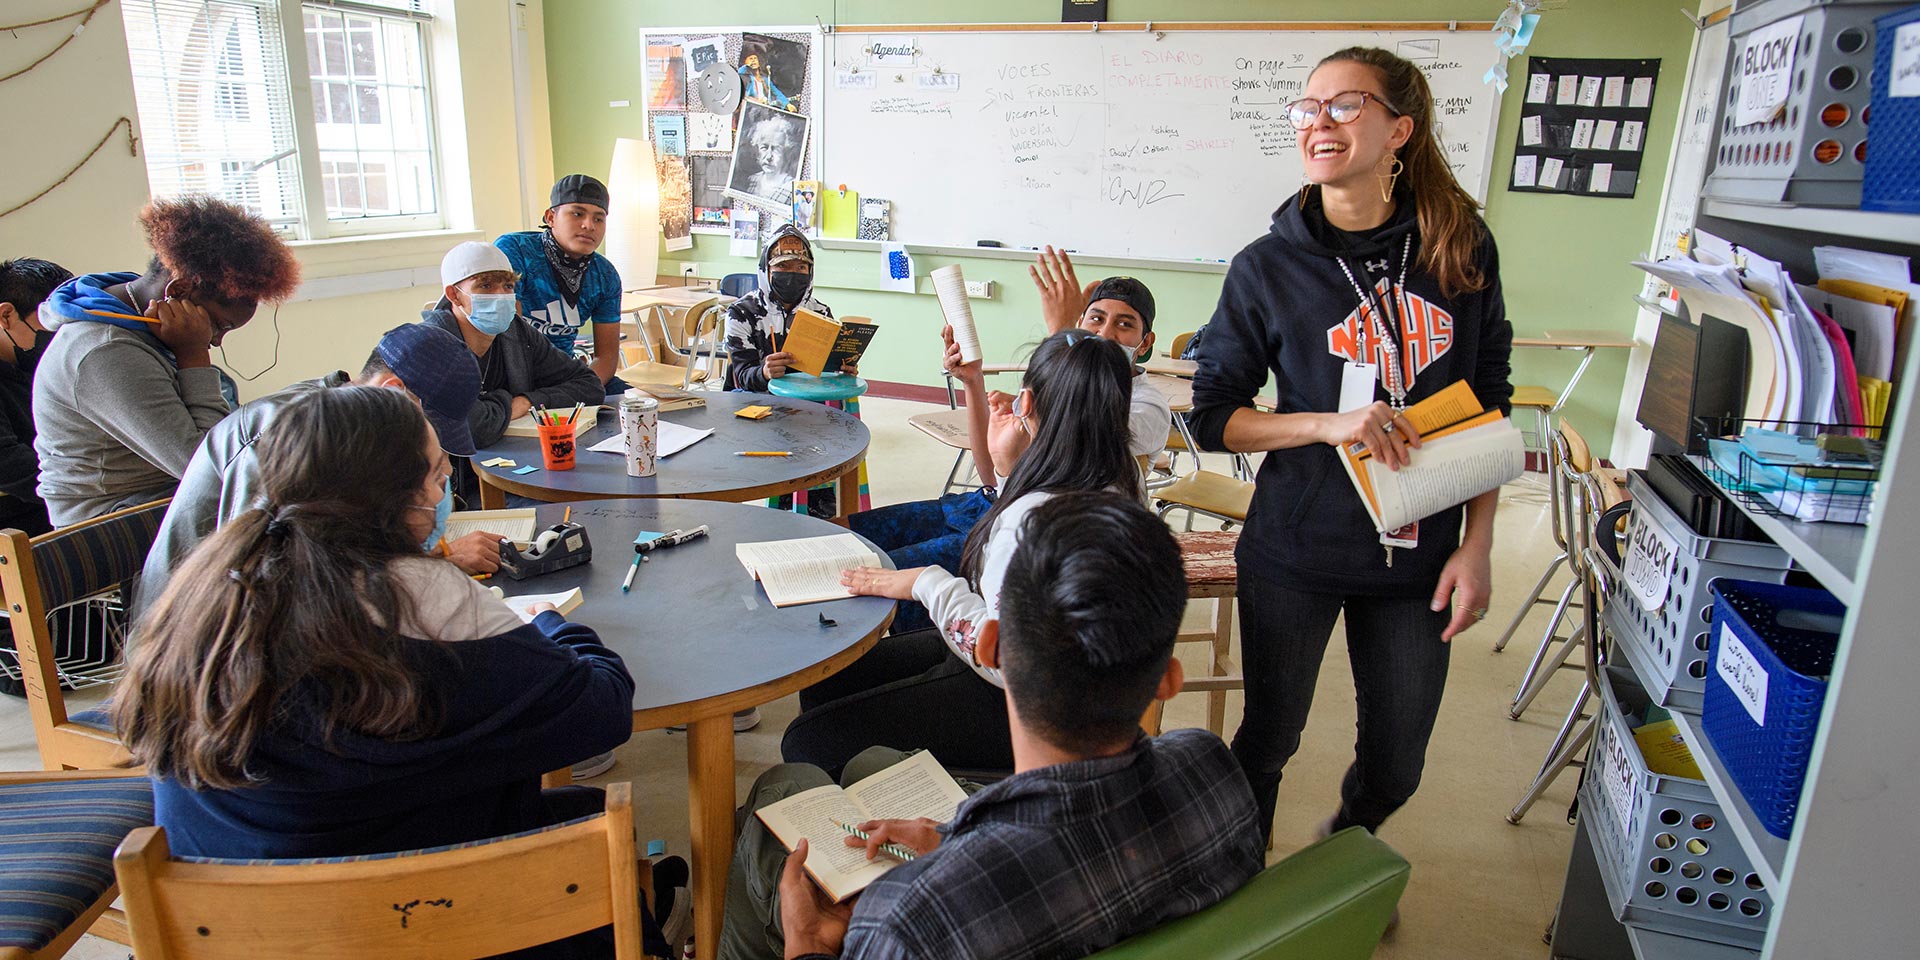 A teacher teaches from a book during a class at New Hanover High School